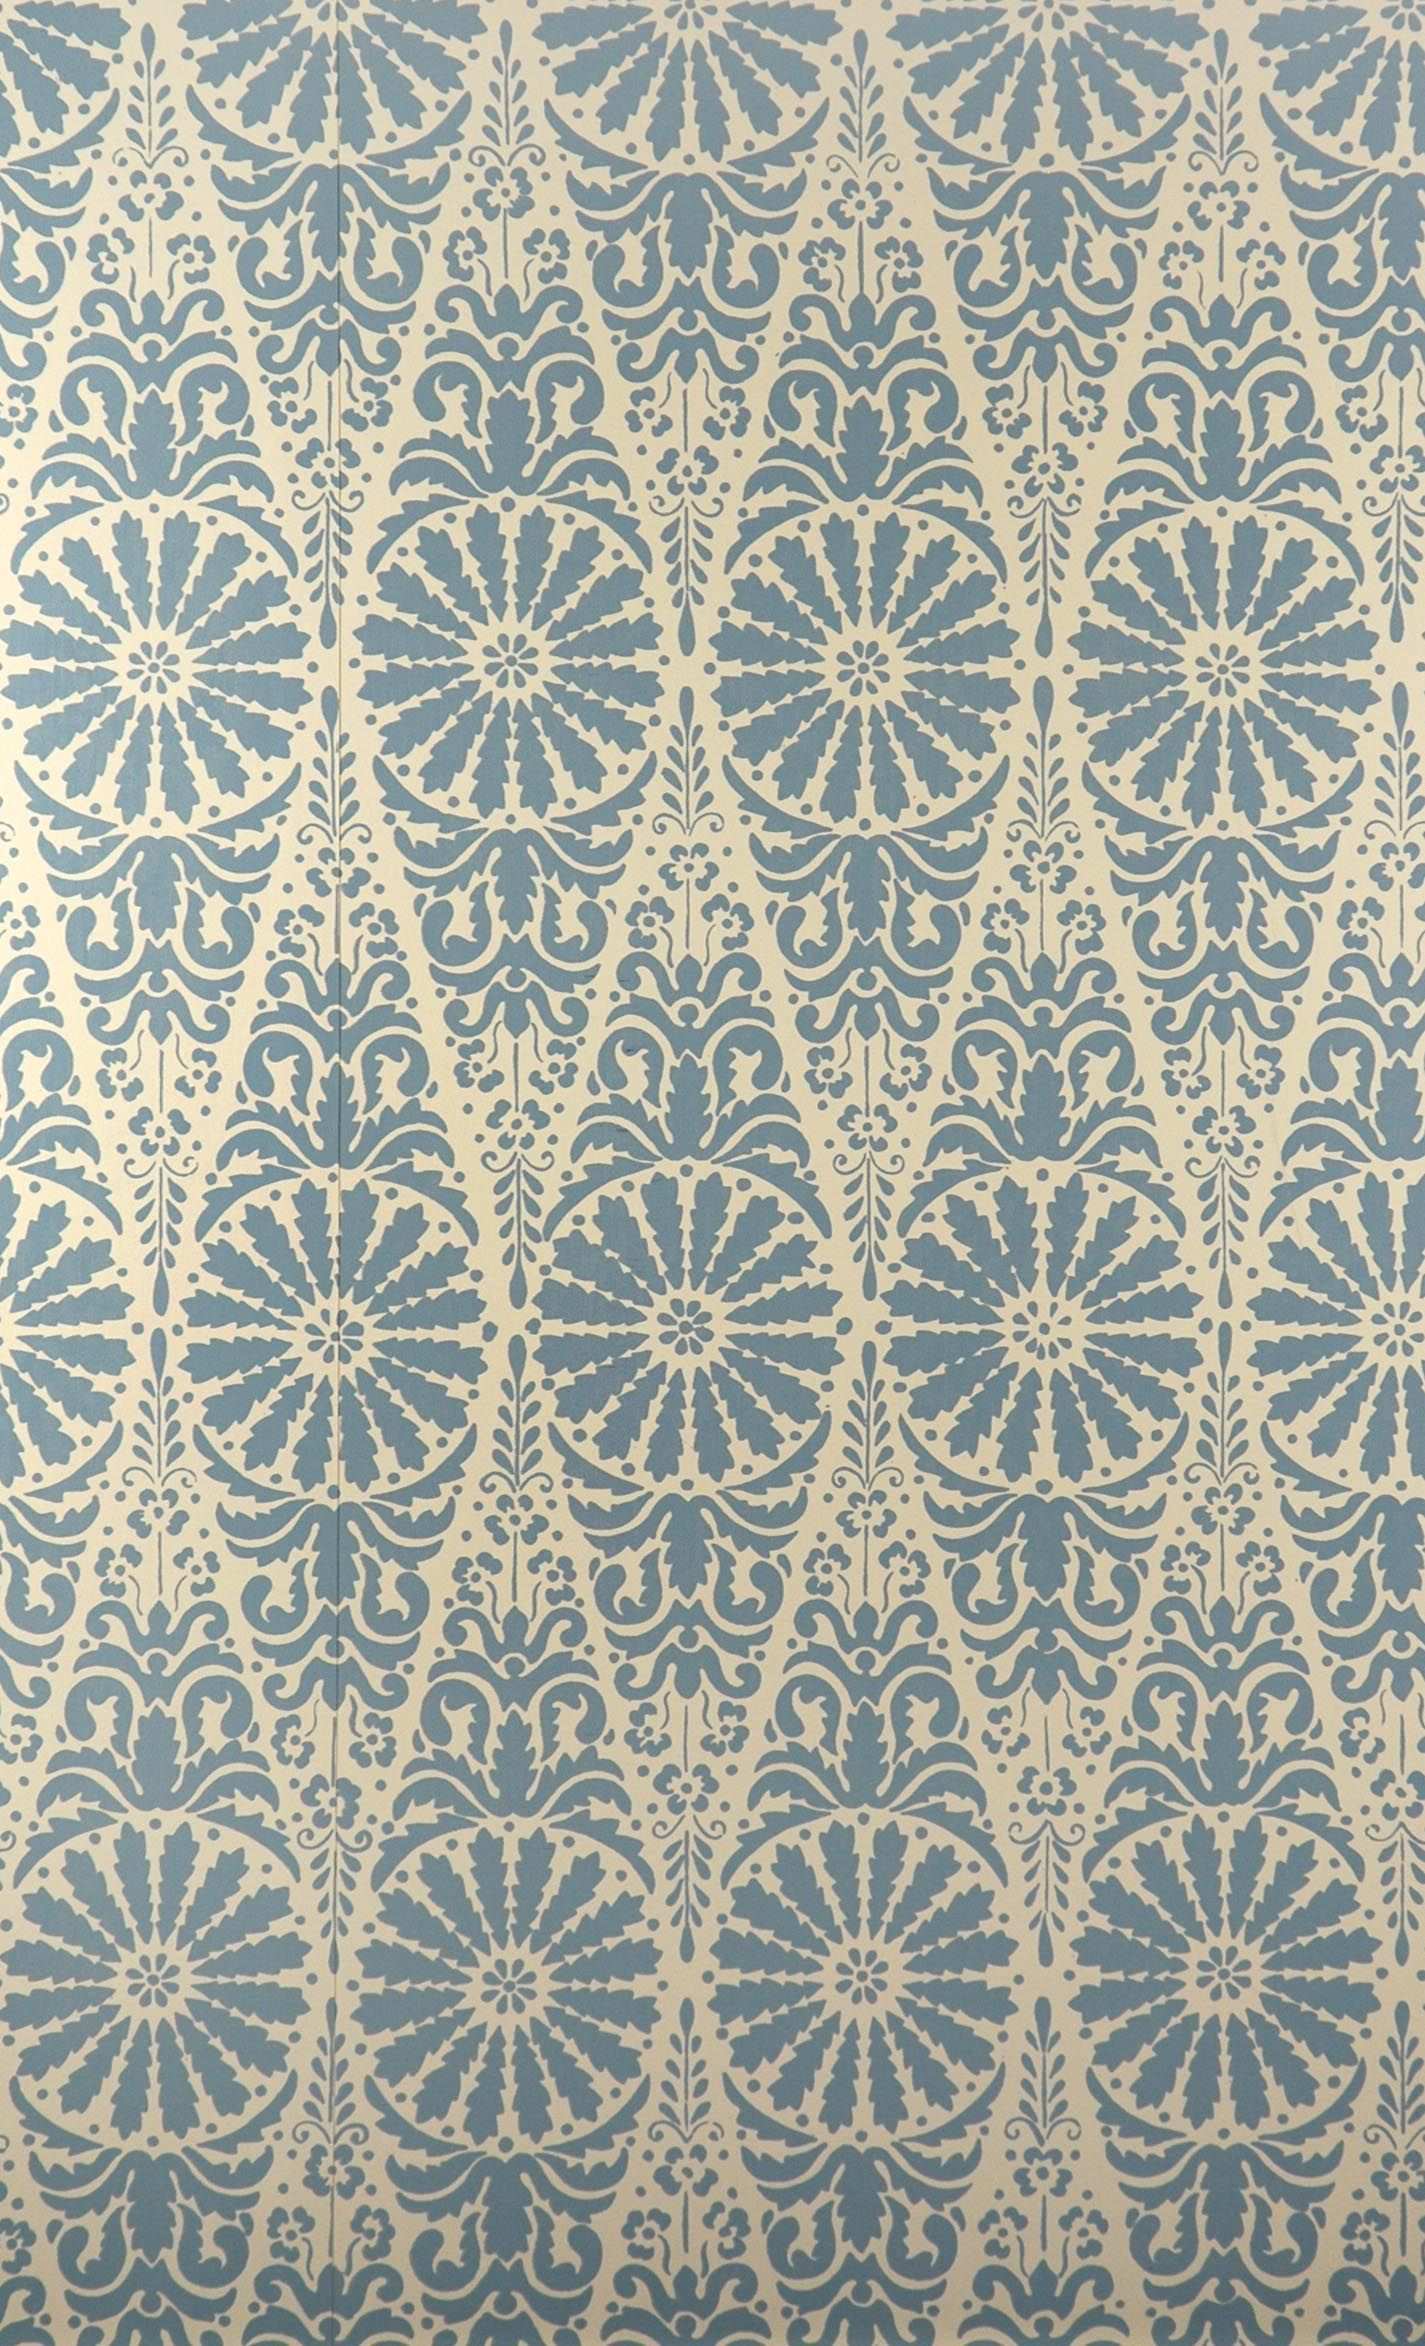 Tapete 1363 C Josephine Blau Historische Tapeten Hembus Gmbh Tapeten Farben Und Tapeten Mustertapete